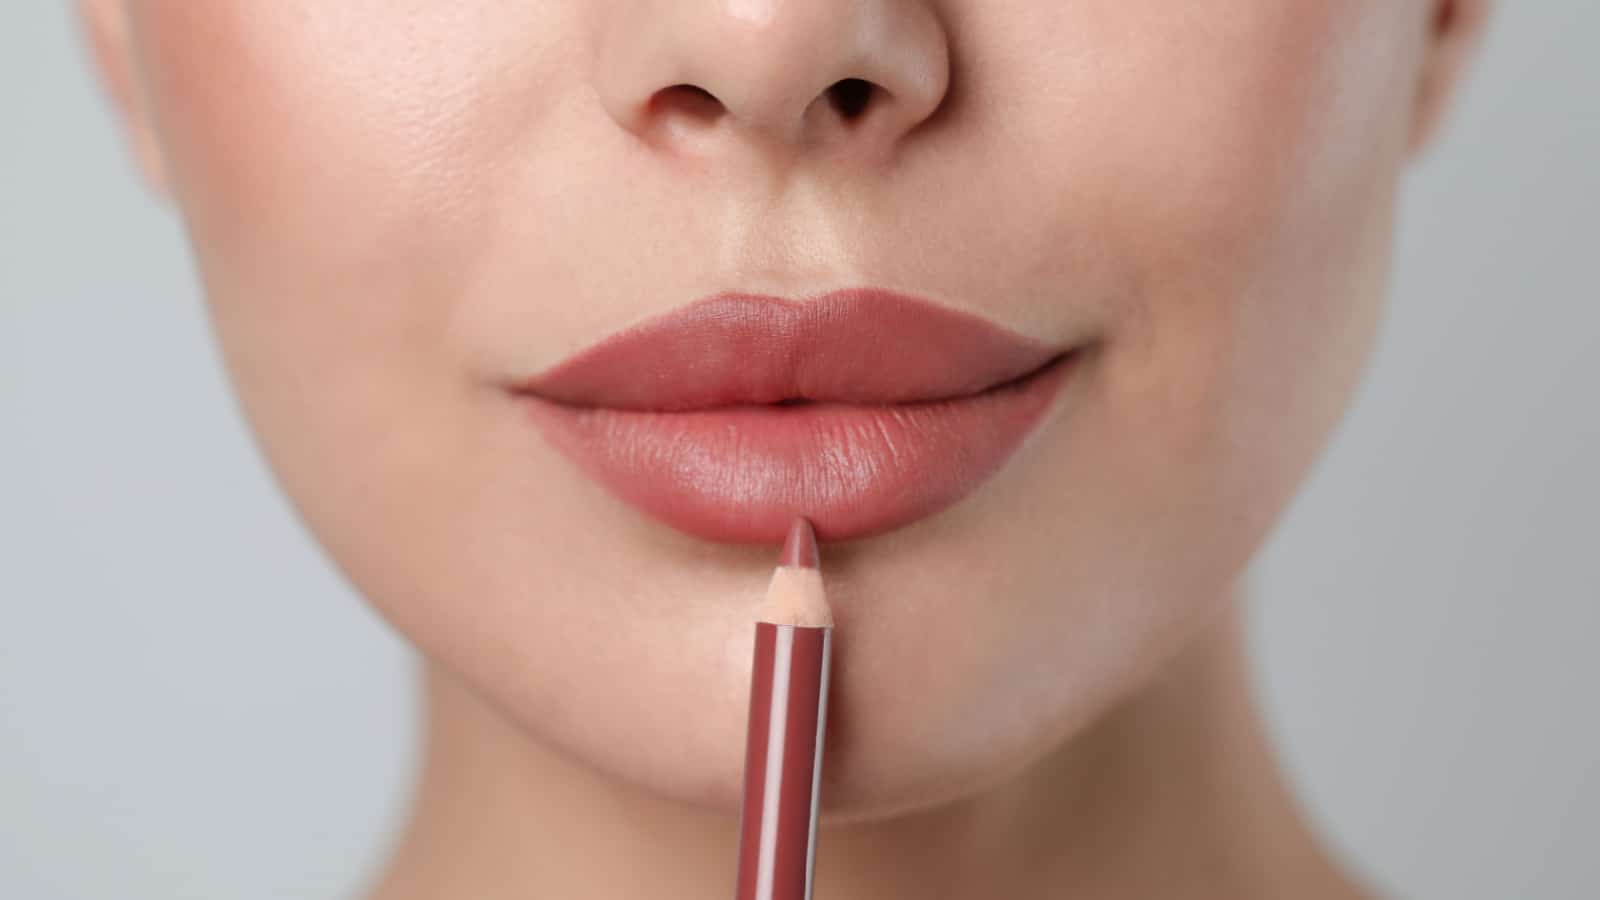 Young woman applying beautiful nude lip pencil on light grey background, closeup